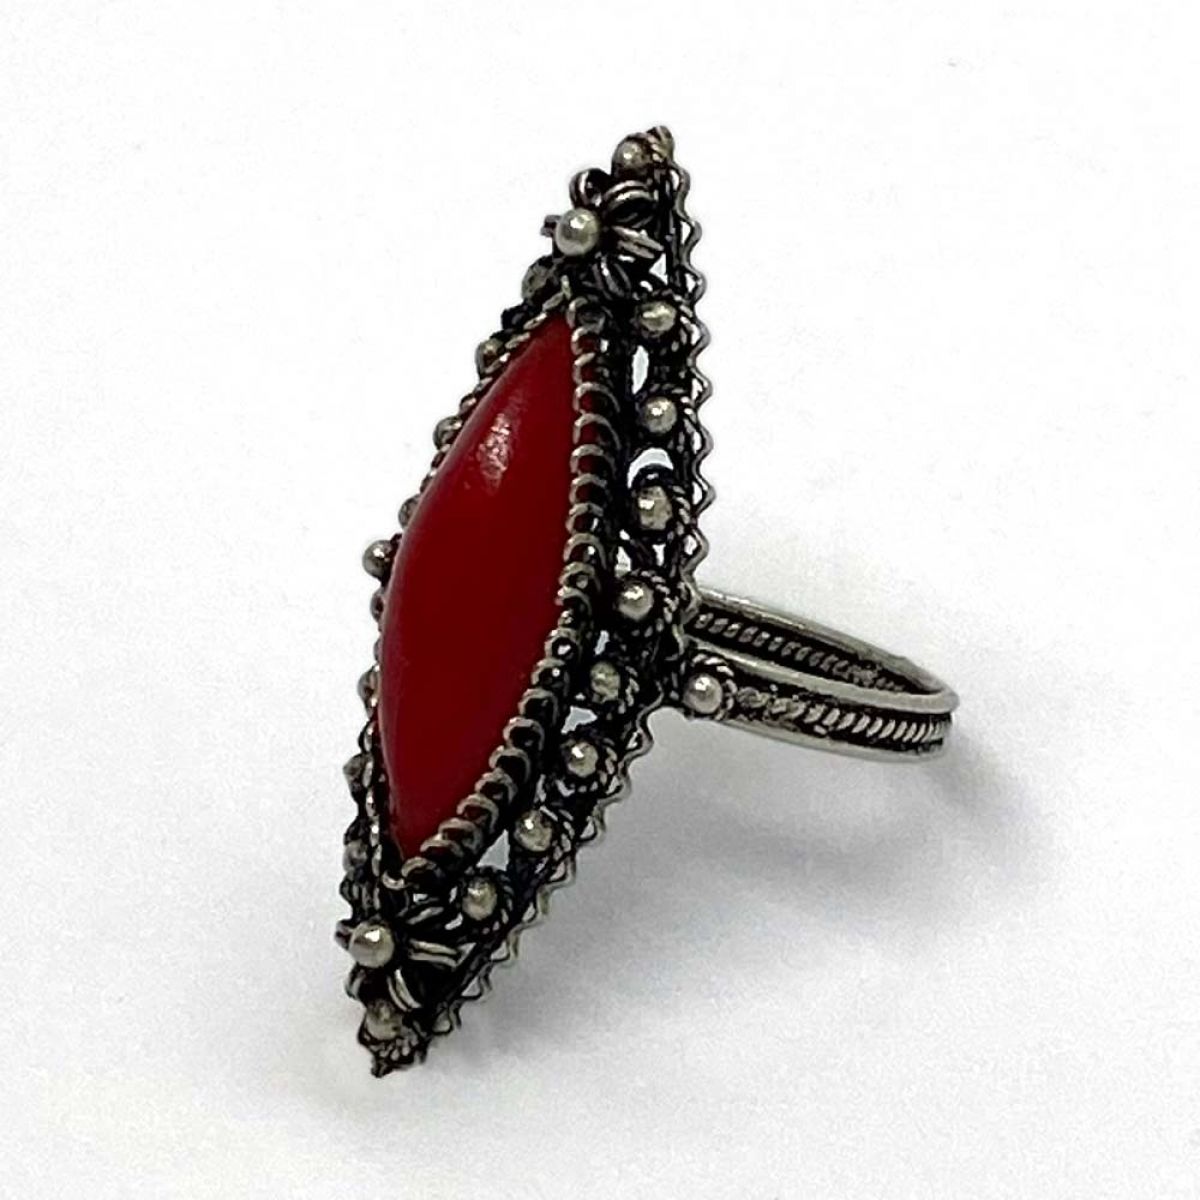 Srebrni prsten s crvenim kamenom u sredini